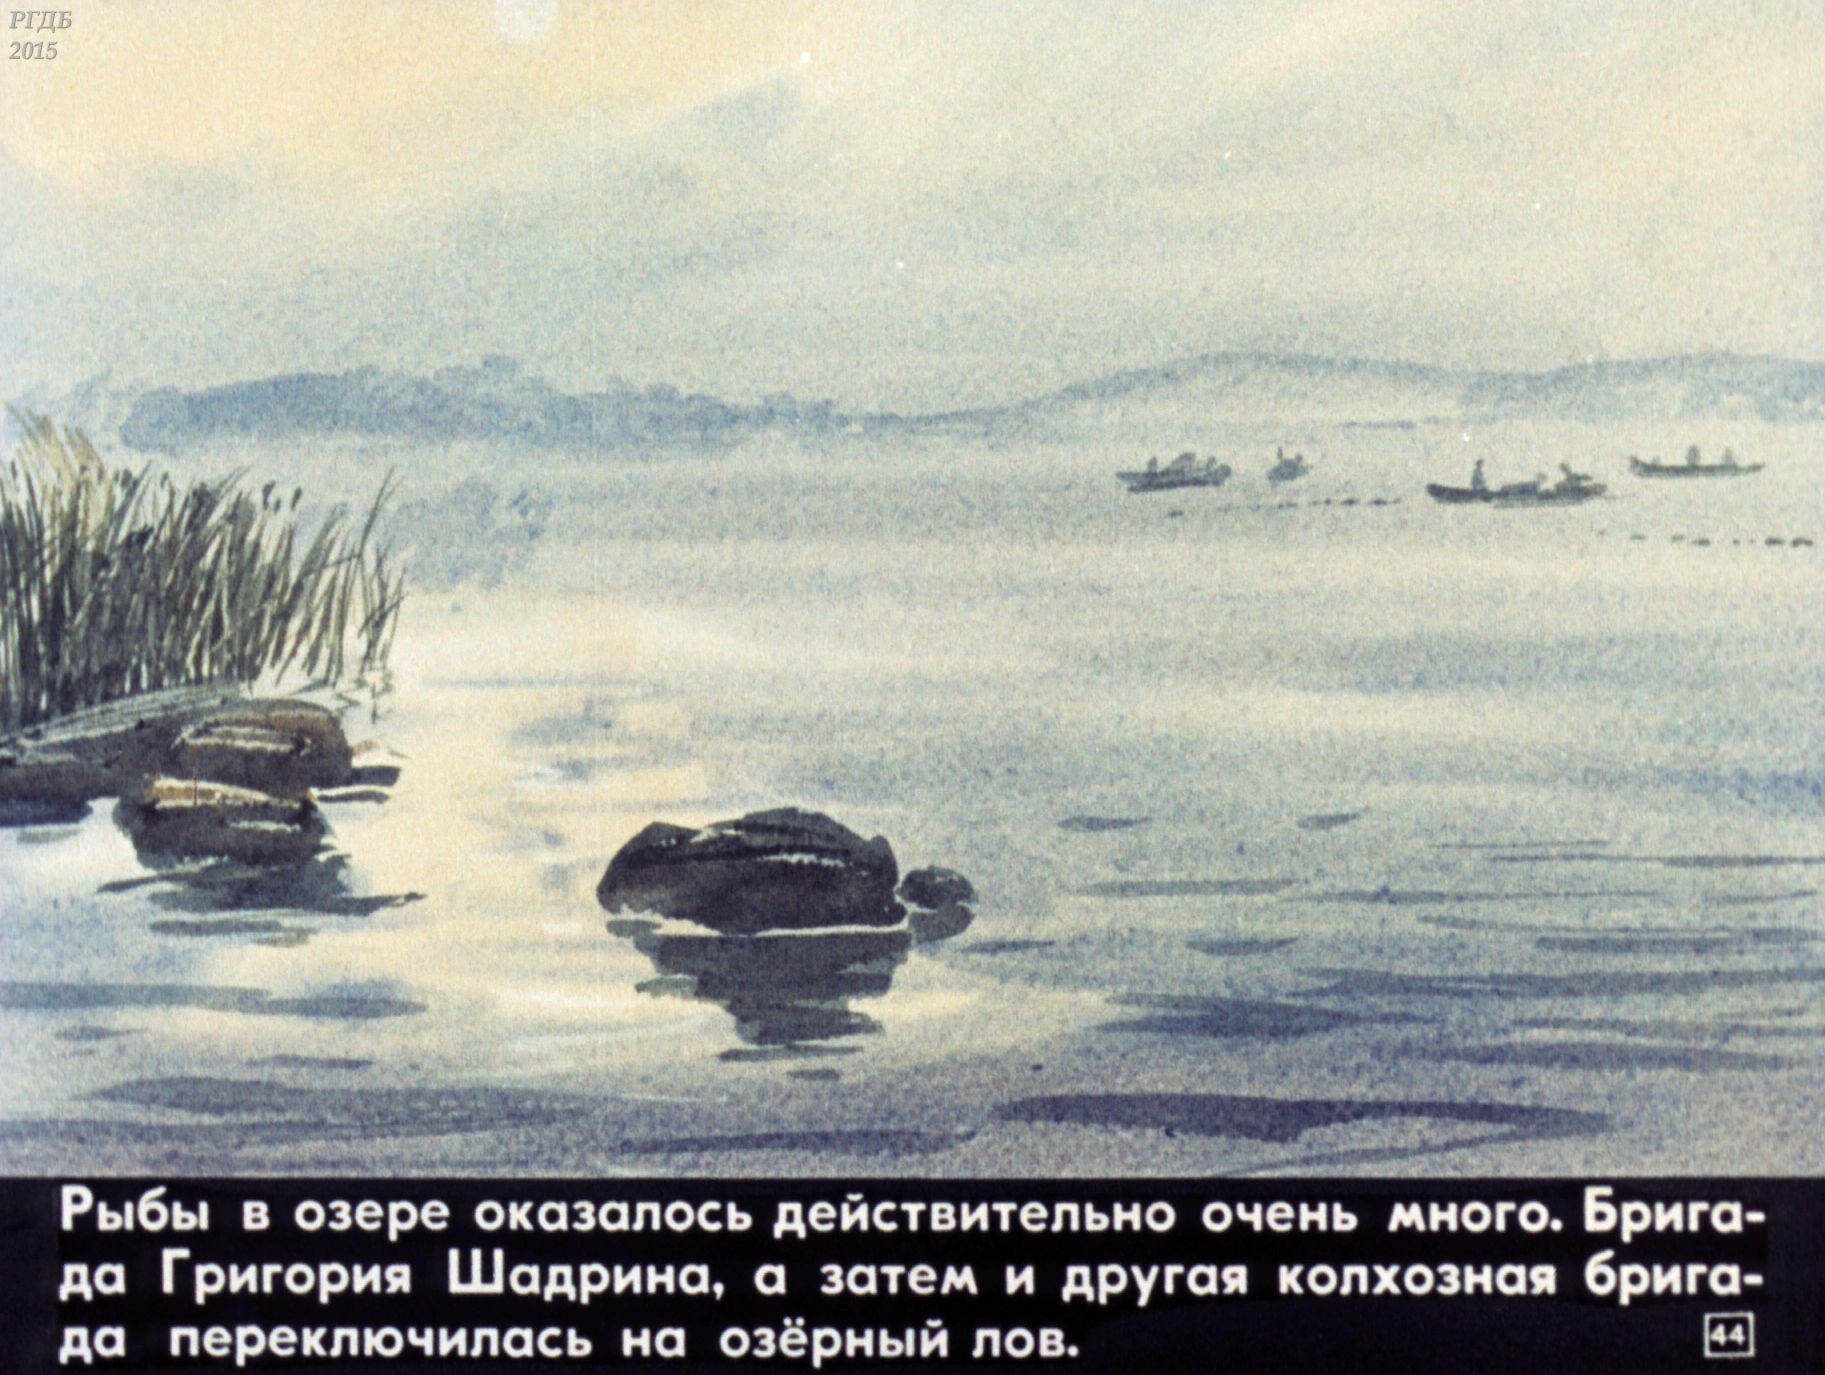 Пароход васюткино озеро. Васюткино озеро. Васюткино озеро Васютка. Иллюстрация к рассказу Васюткино озеро с цитатой. Озеро из Васюткино озеро.